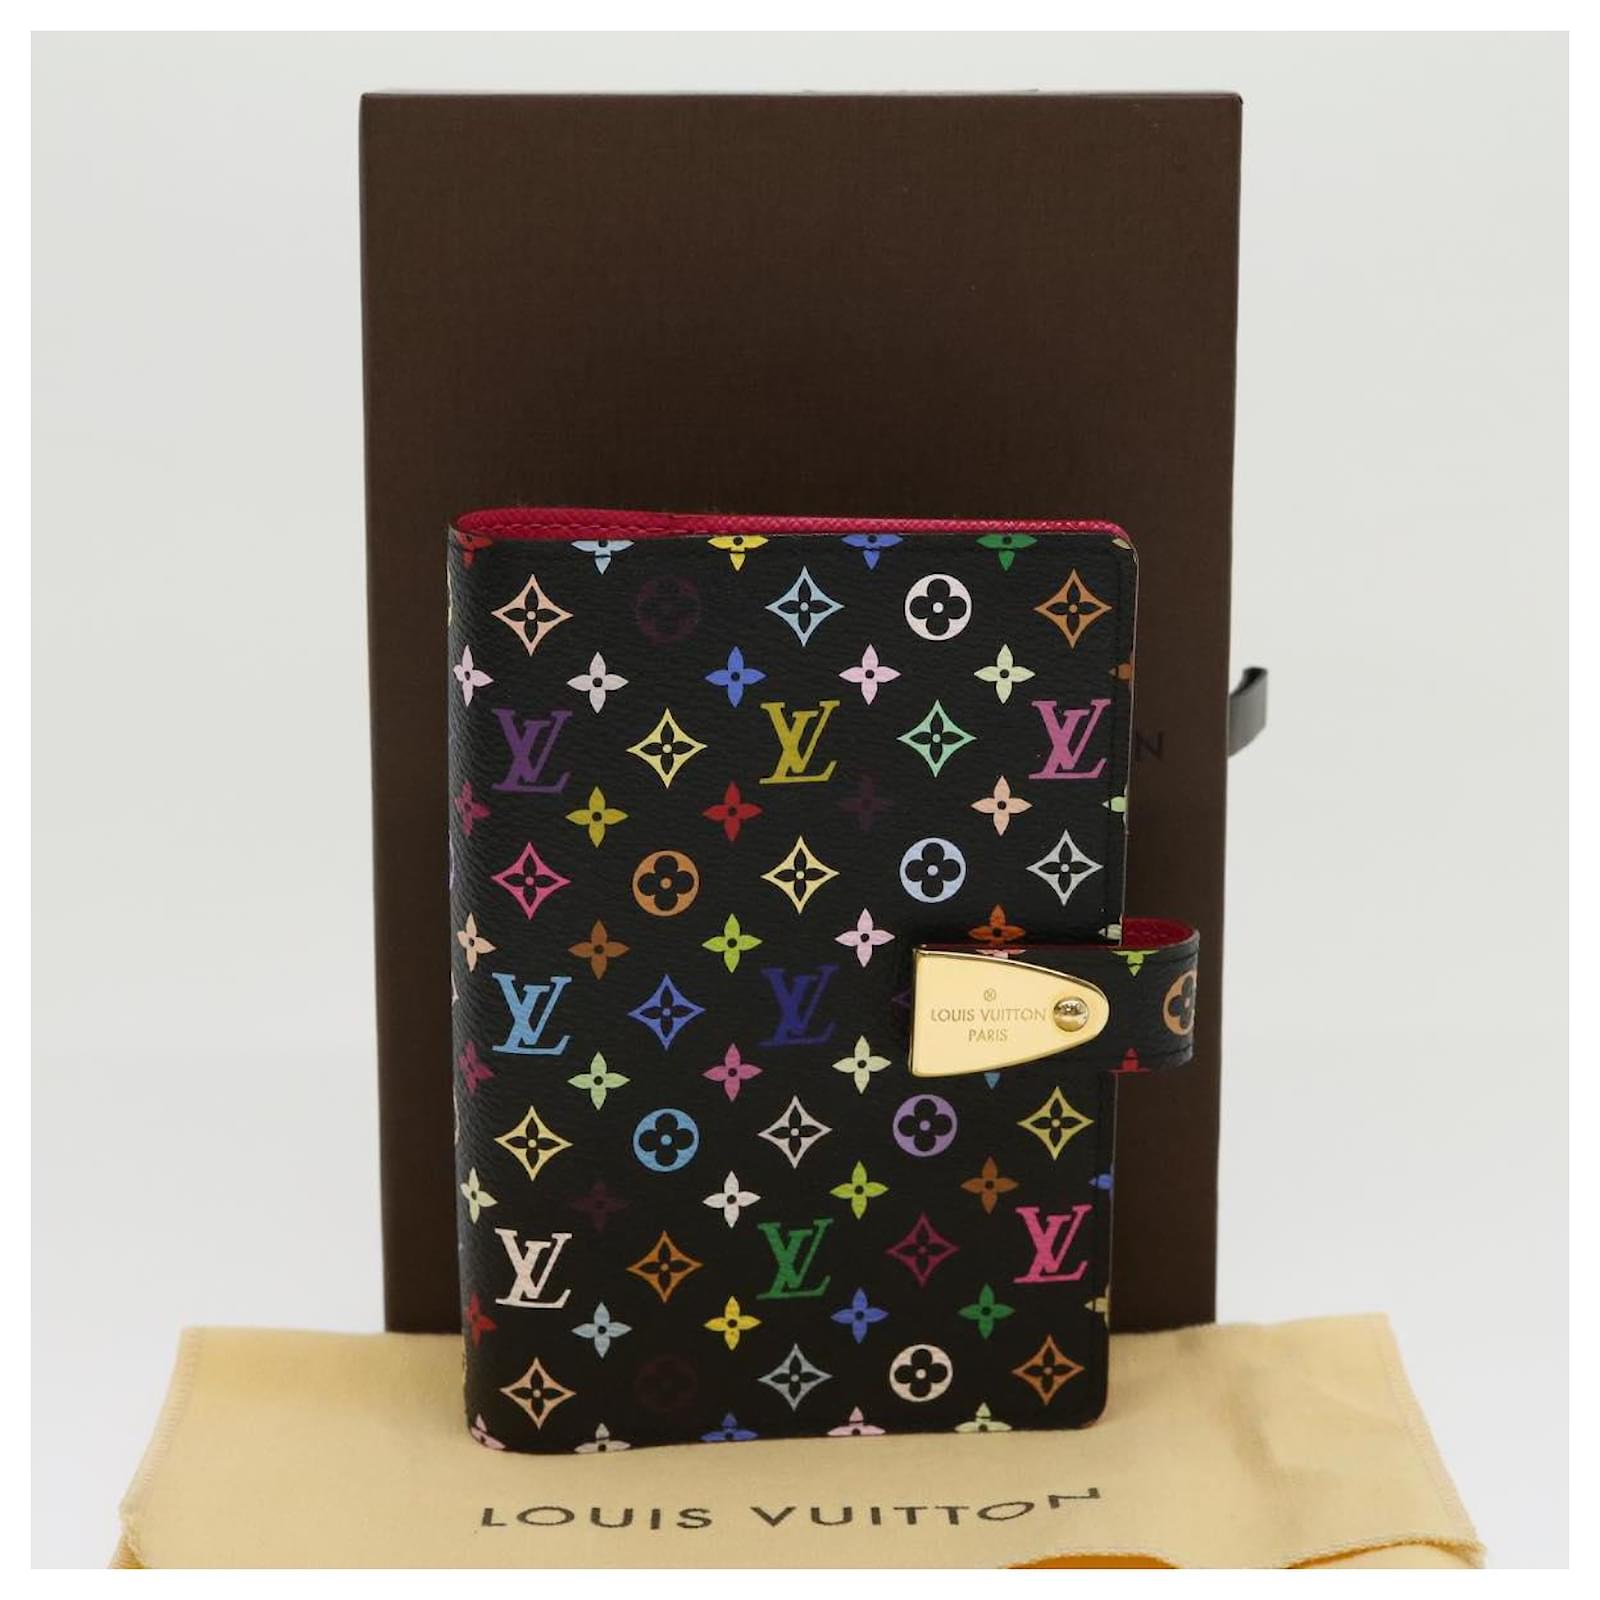 Louis Vuitton Multicolor Agenda Partonaire Pm Day Planner Cover